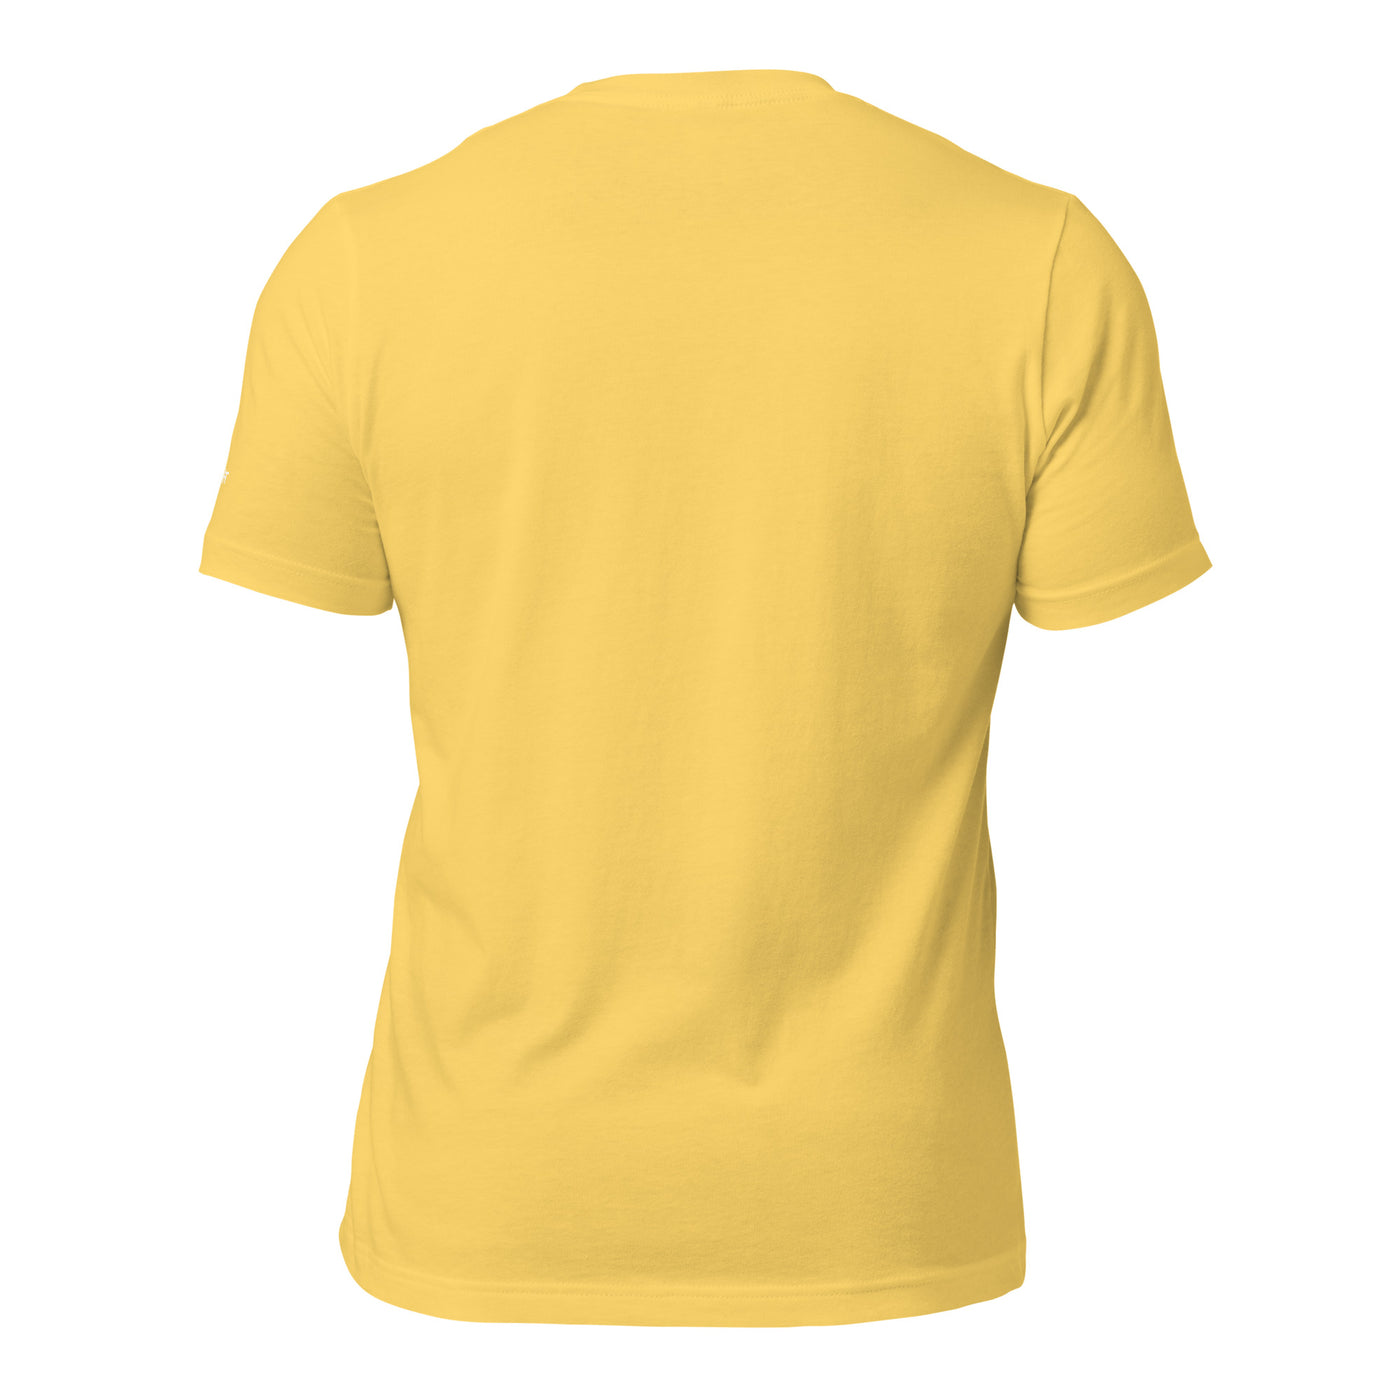 1 2 3 4 5 - Unisex t-shirt